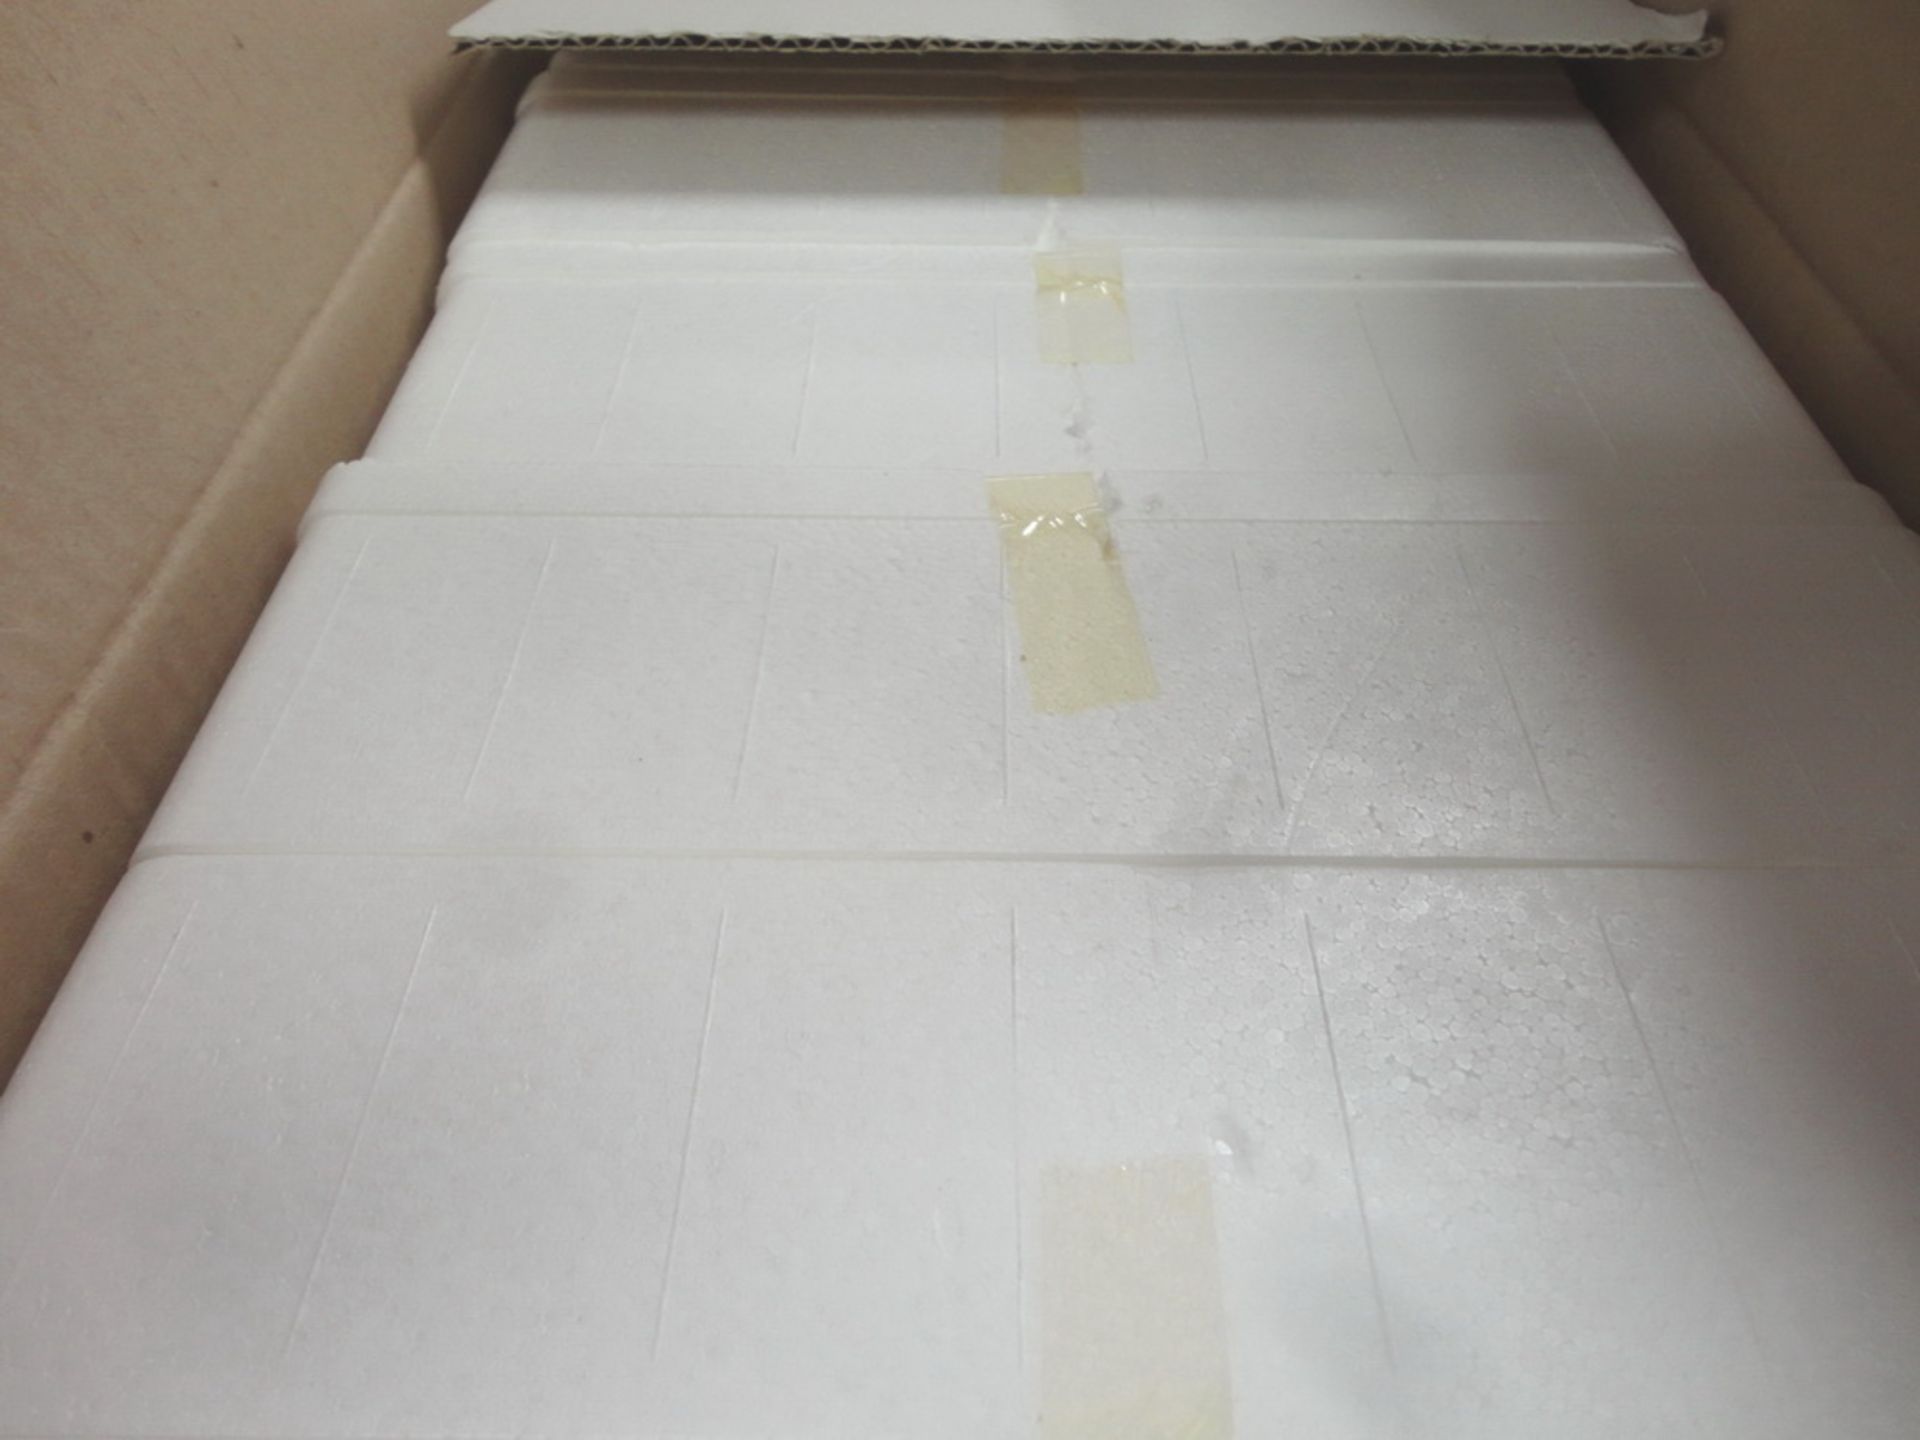 (2) Boxes of unused VWR 4.5 ml cuvettes, 5 cuvettes per box